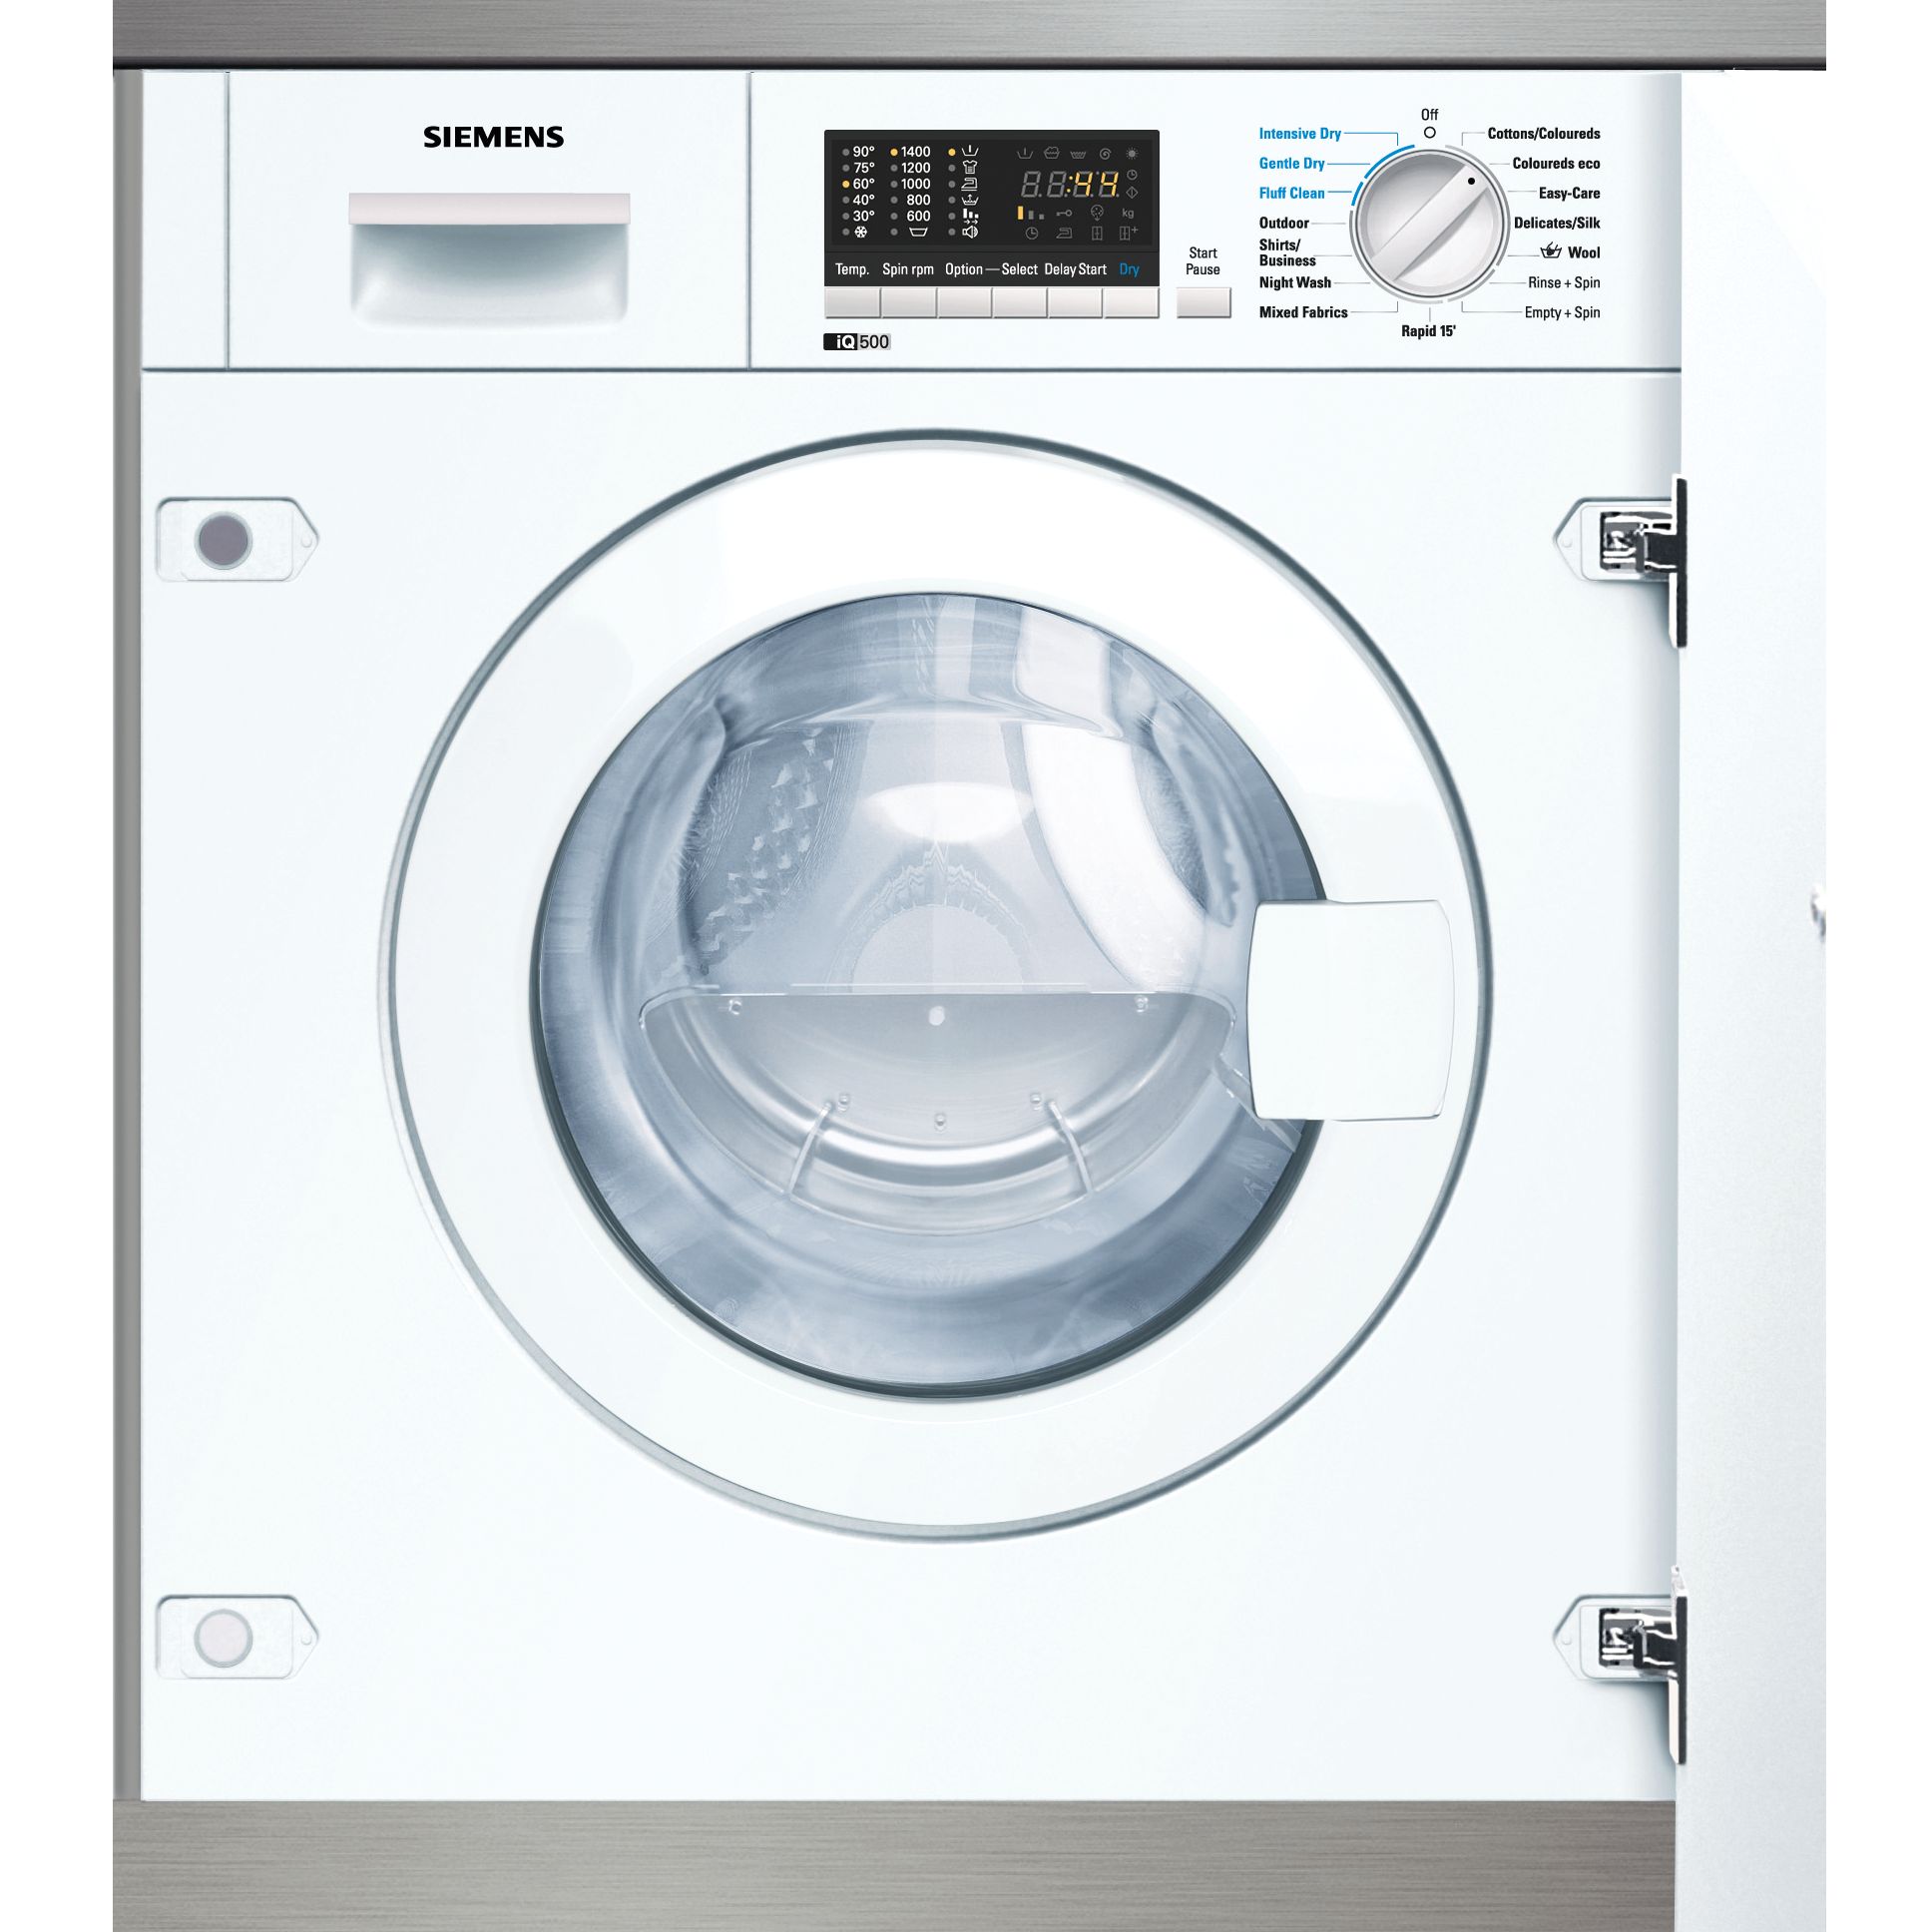 Siemens WK14D540GB Integrated Washer Dryer at JohnLewis